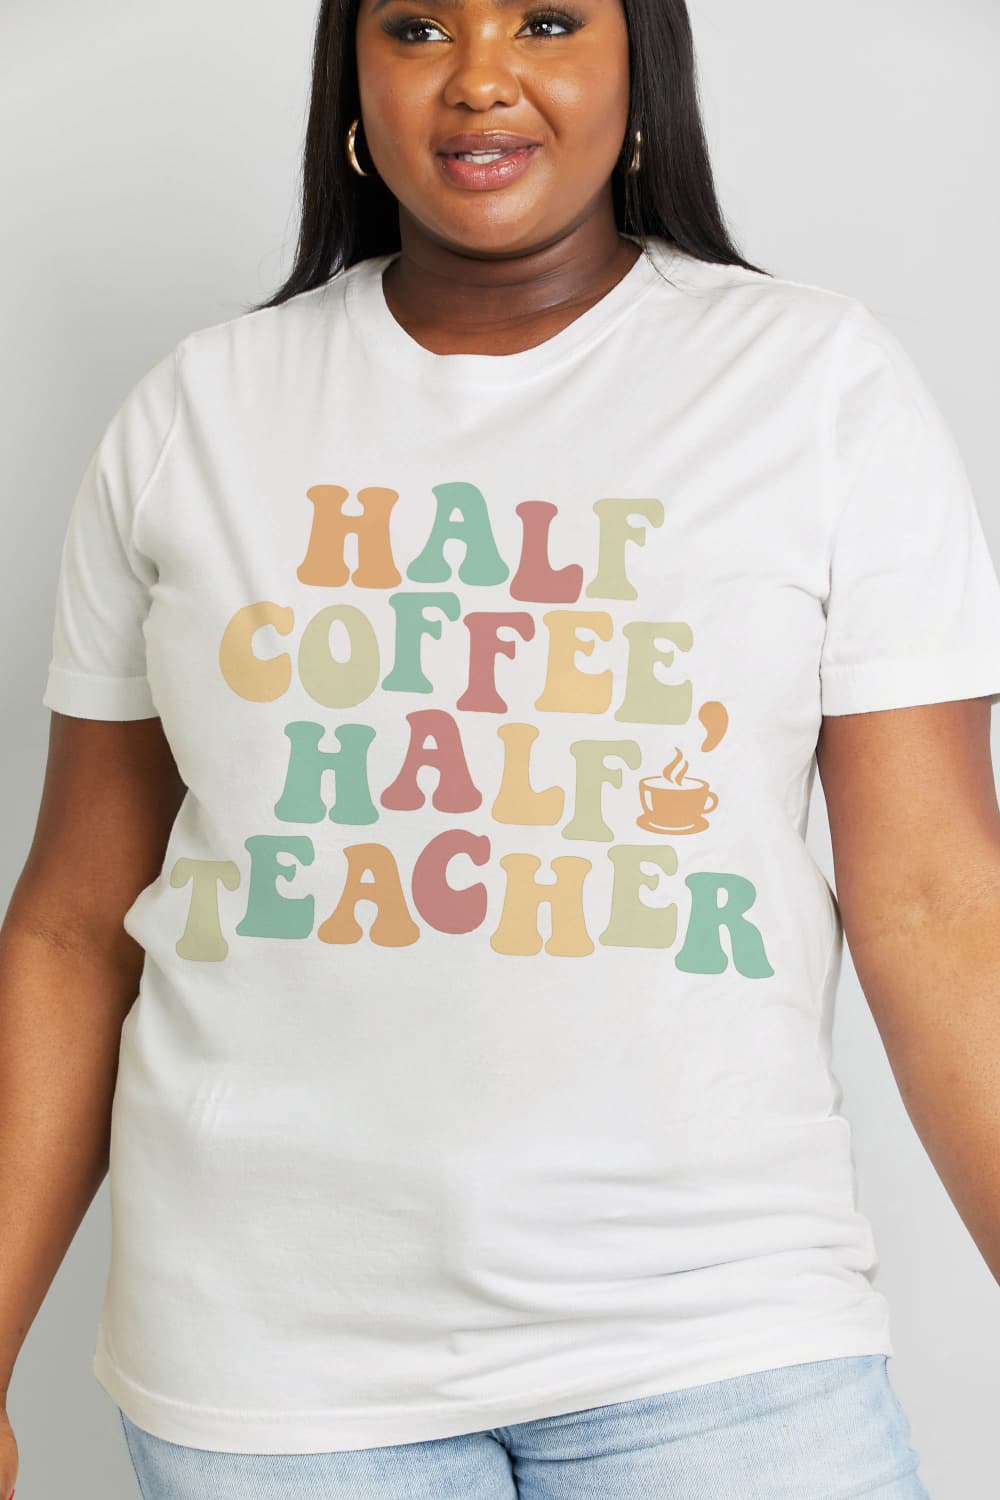 HALF COFFEE HALF TEACHER Cotton Tee - Tangerine Goddess